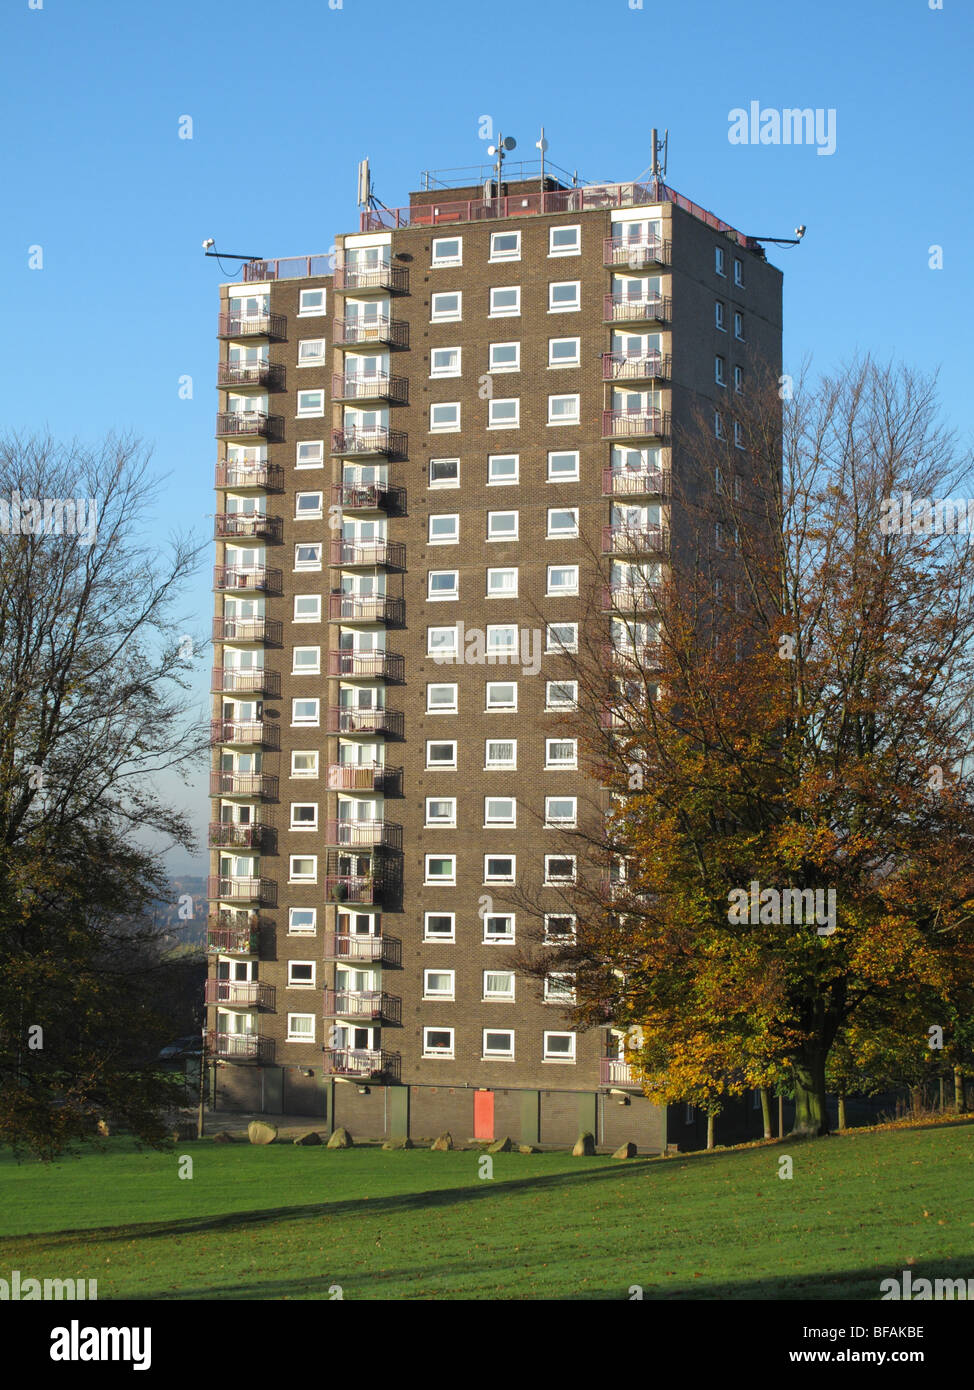 A 1960's high-rise tower block in a U.K. city. Stock Photo